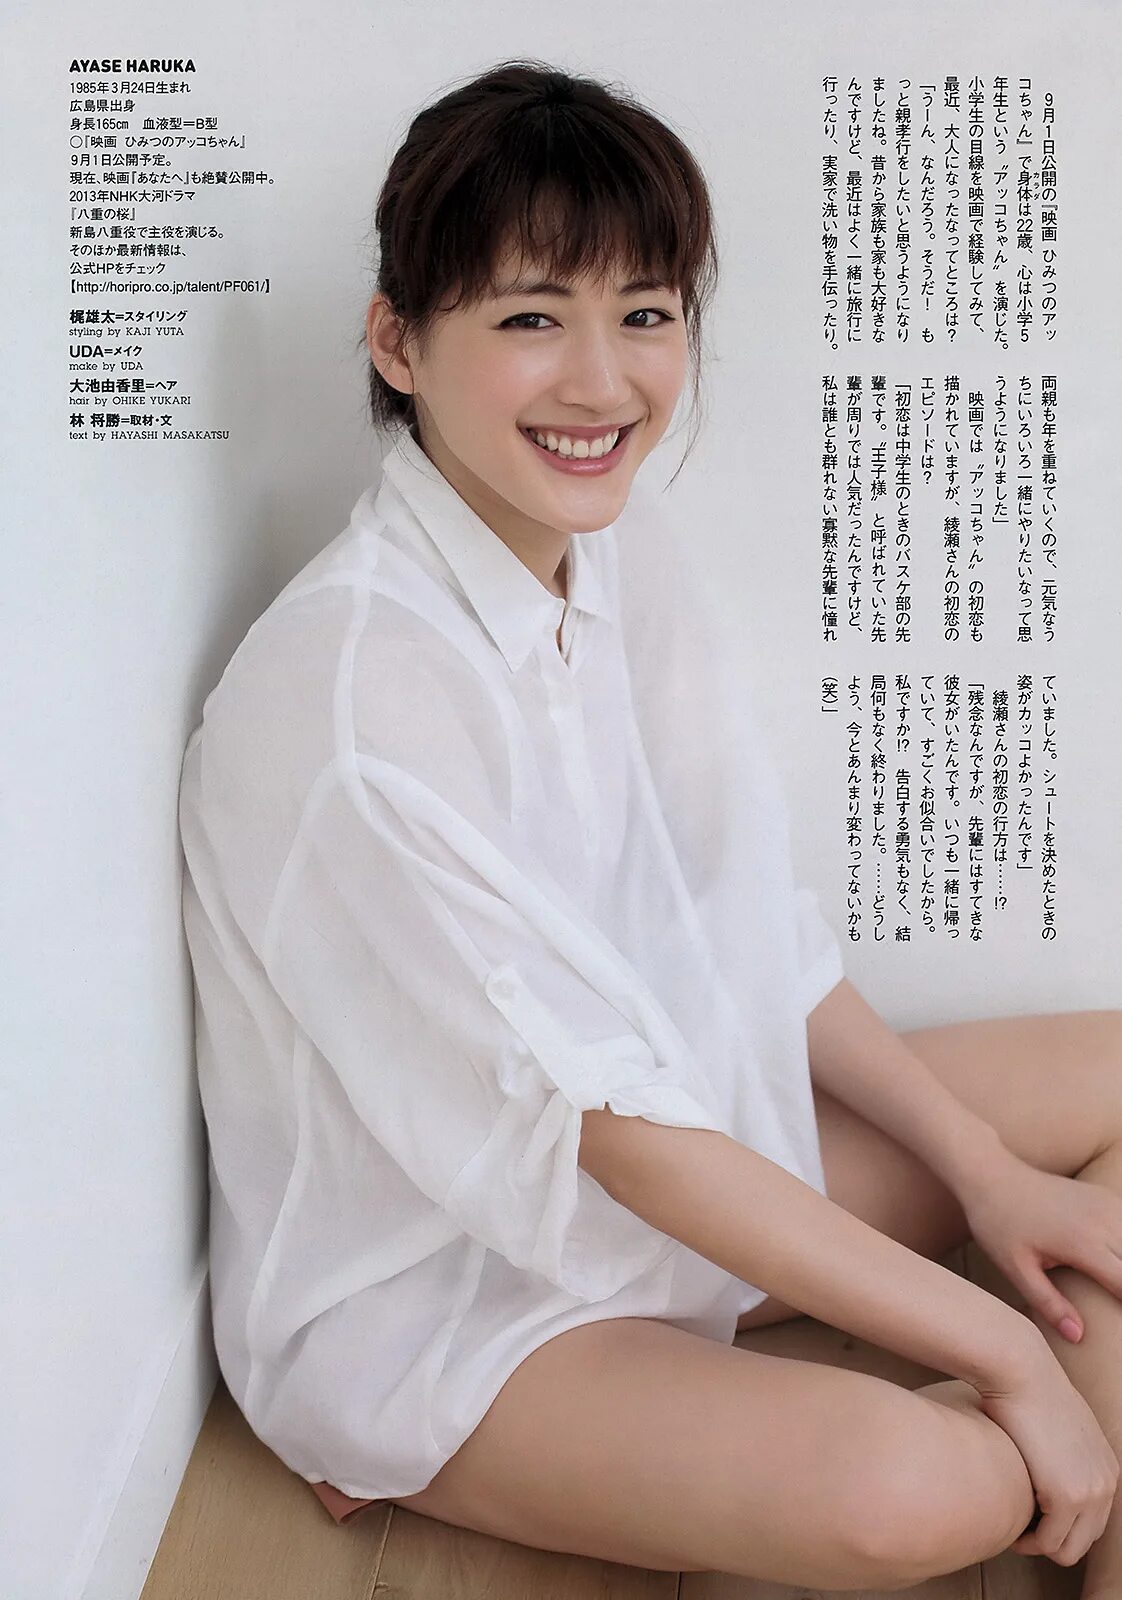 Харука аясэ. Аясе Харука актриса. Харука Аясэ (Haruka Ayase). Харука Аясэ +18.